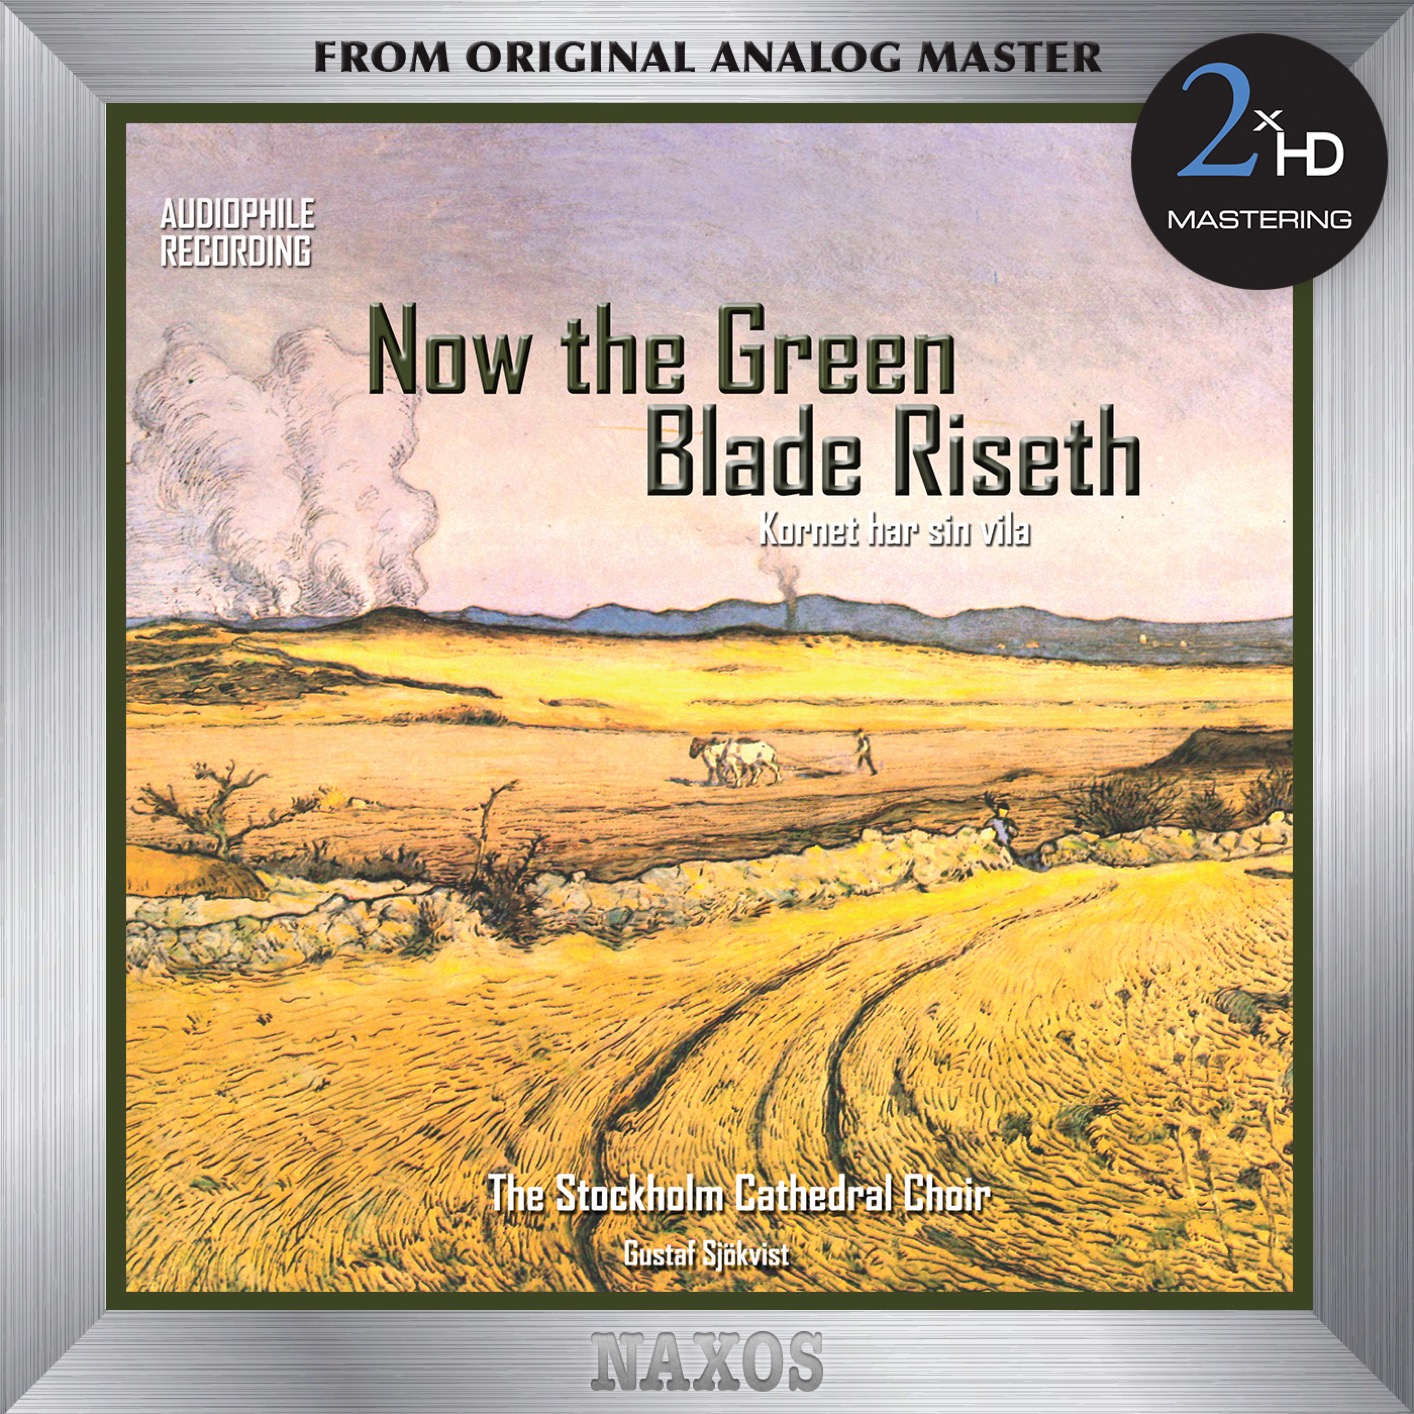 Stockholm Cathedral Choir & Gustaf Sjokvist – Now the Green Blade Riseth (1981/2016) [FLAC 24bit/192kHz]